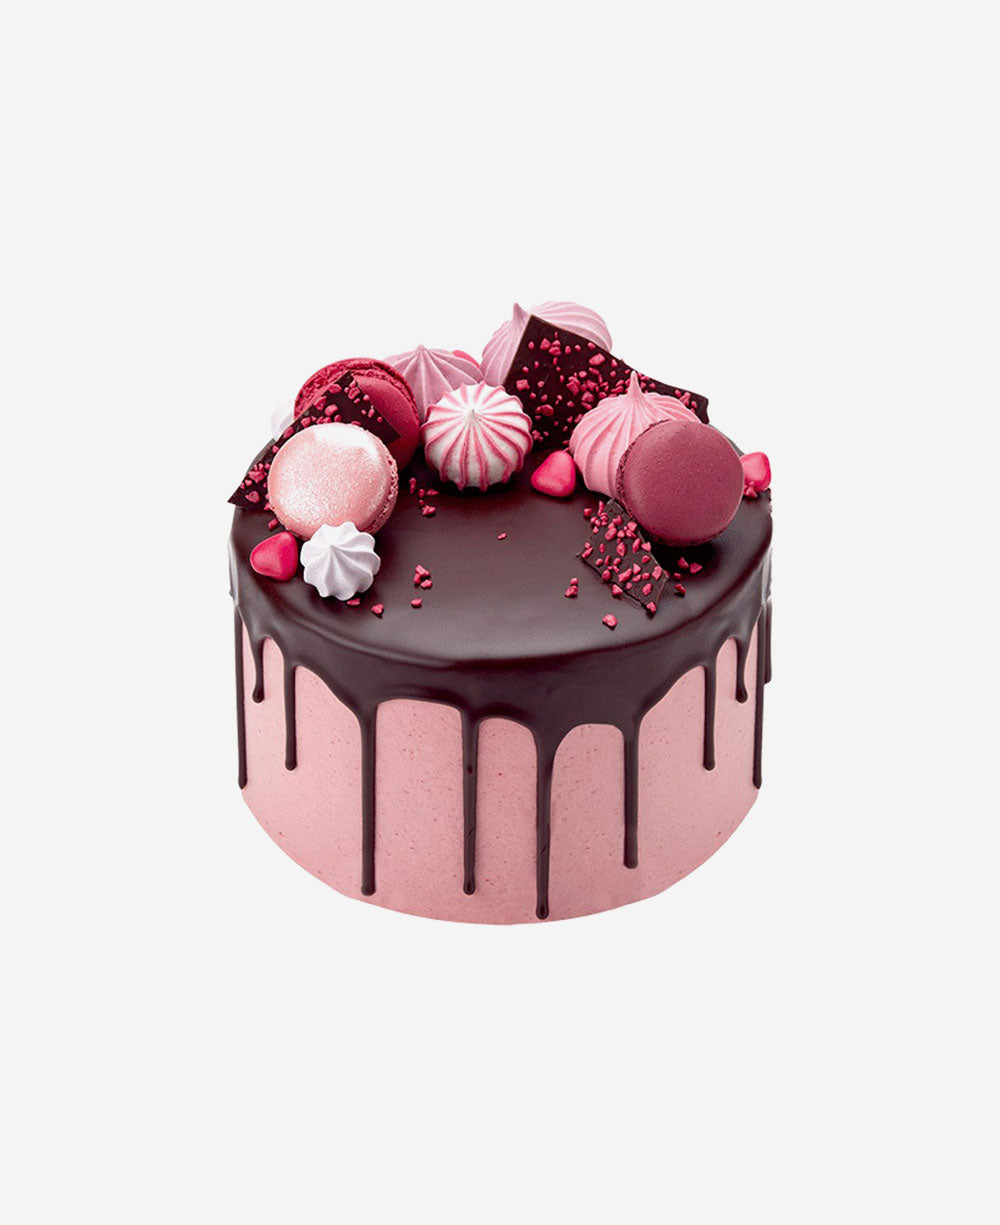 Chocolate birthday cake Variable